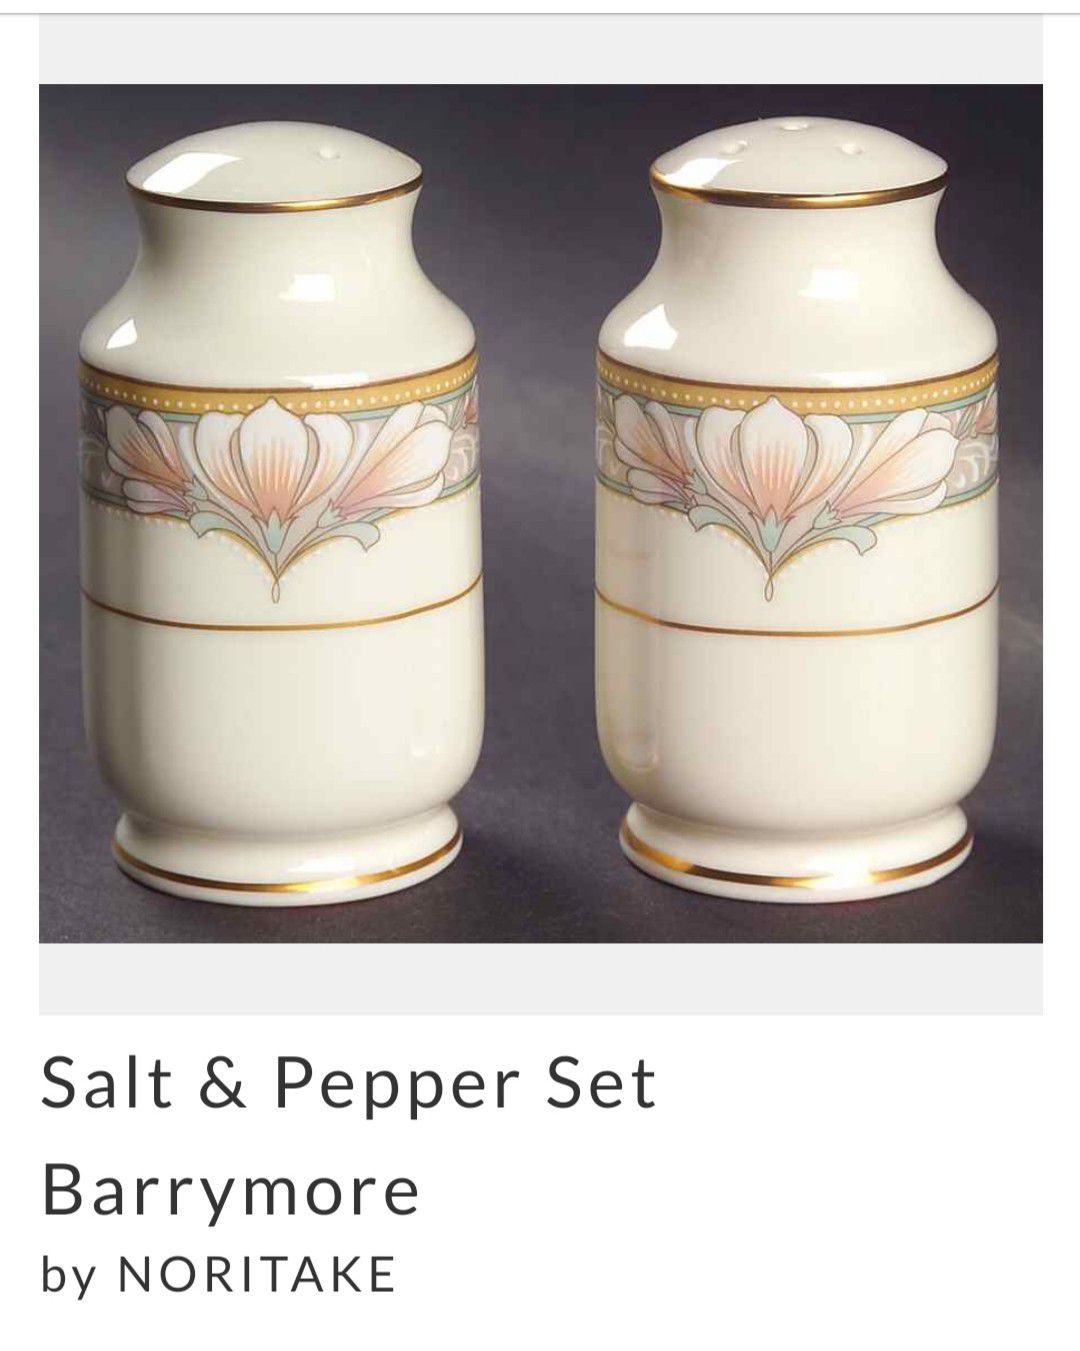 Noritake Barrymore Bone China Salt and Pepper Shaker